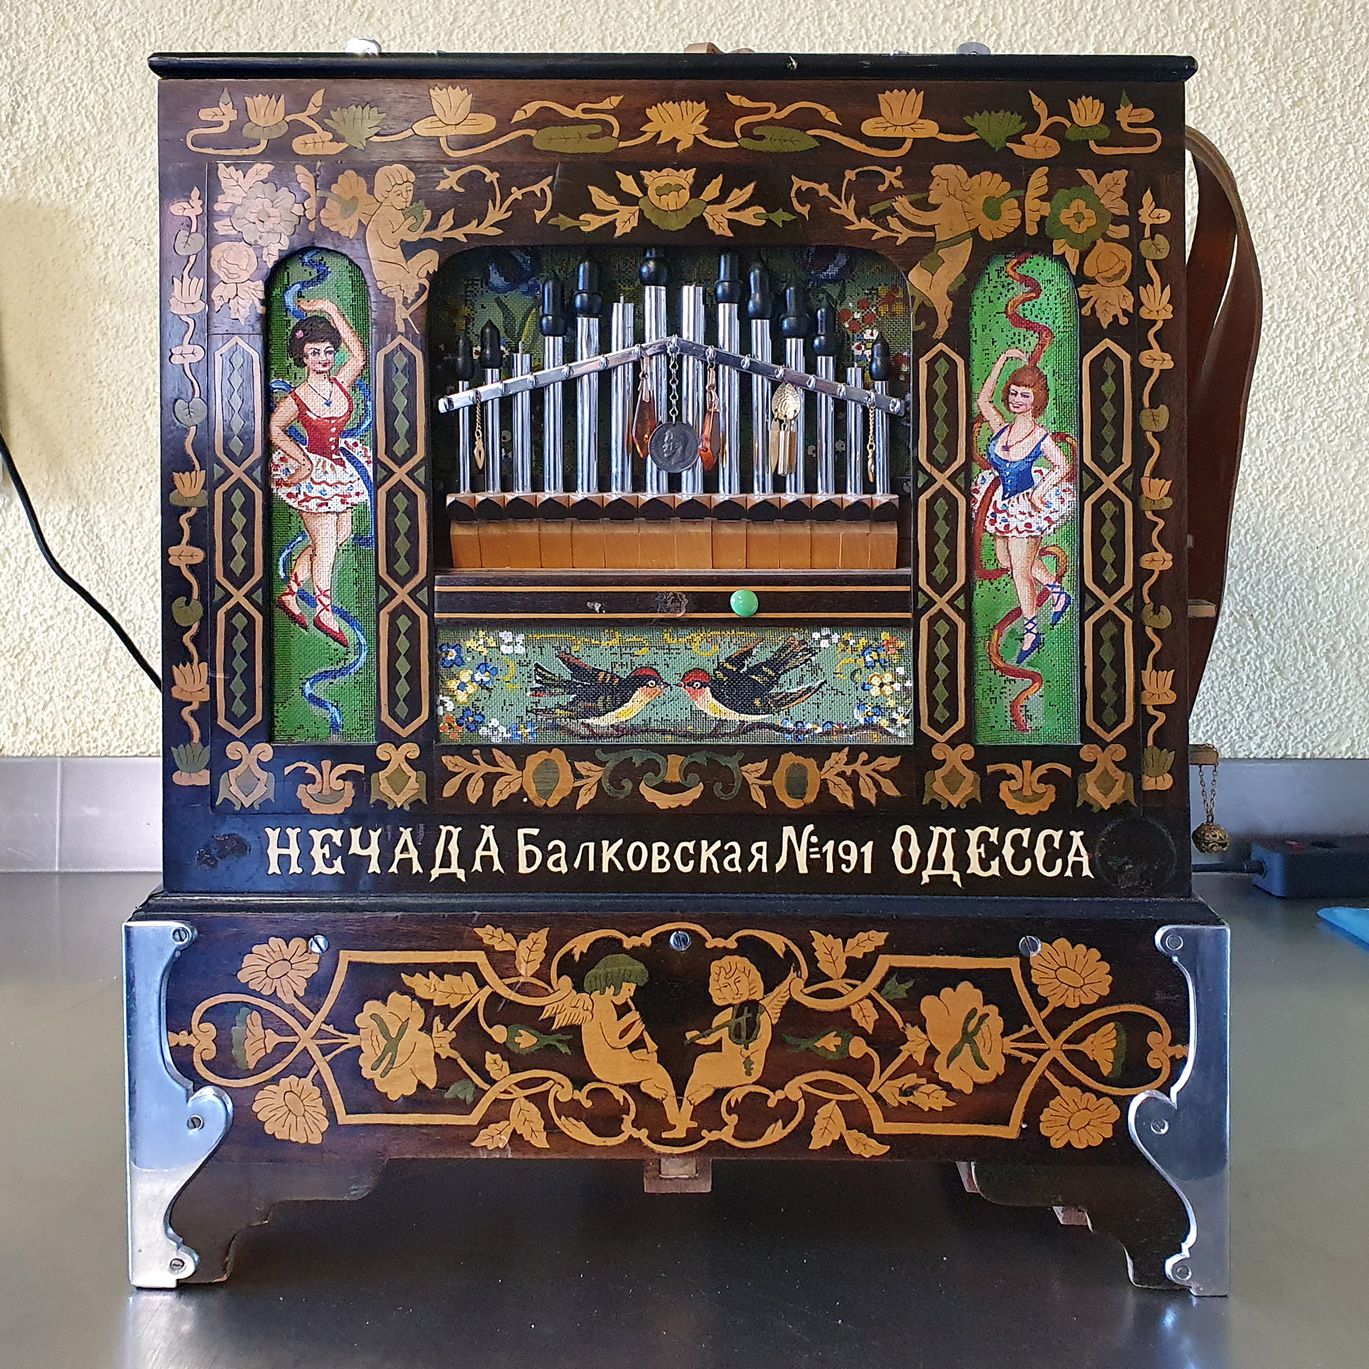 Street Organ from I.Nechada factory (Odessa) around 1910 
Un maravilloso órgano &hellip;